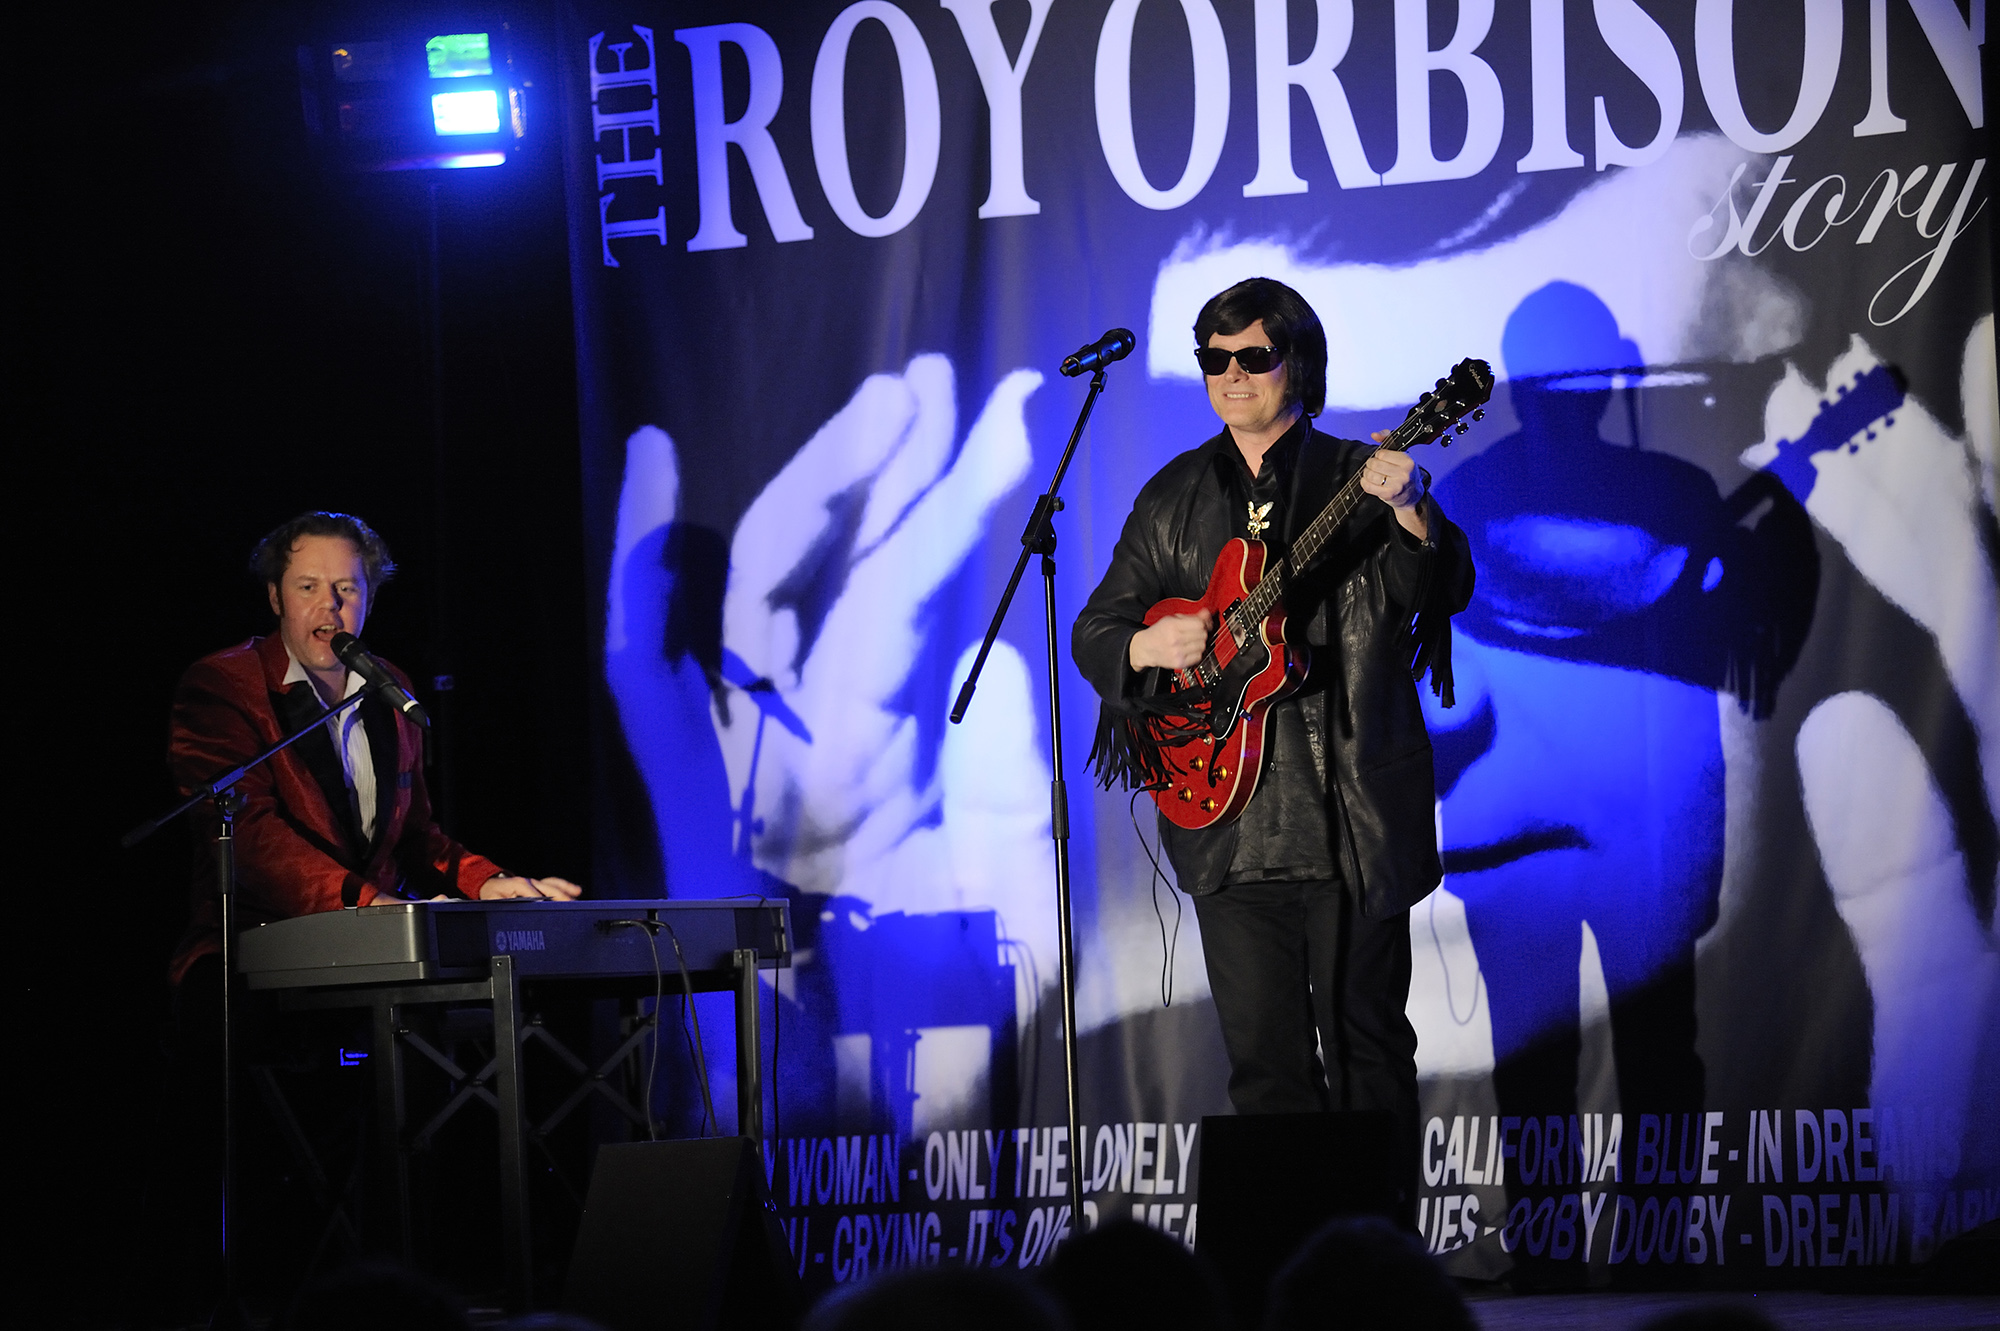 Johnny som Roy Orbison